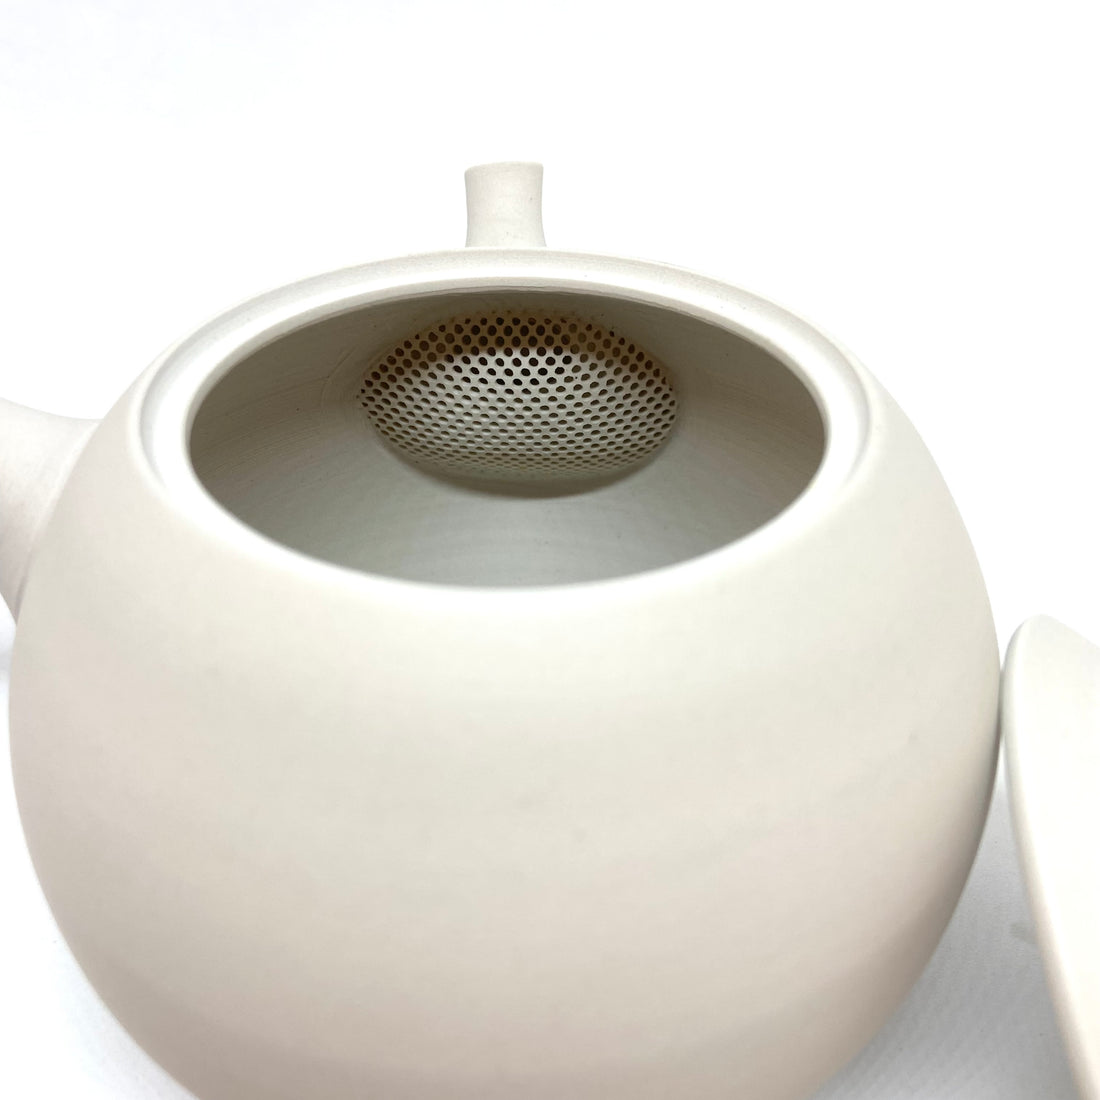 Kyusu Japanese Teapot - White Clay - Marugata - 310ml - #303